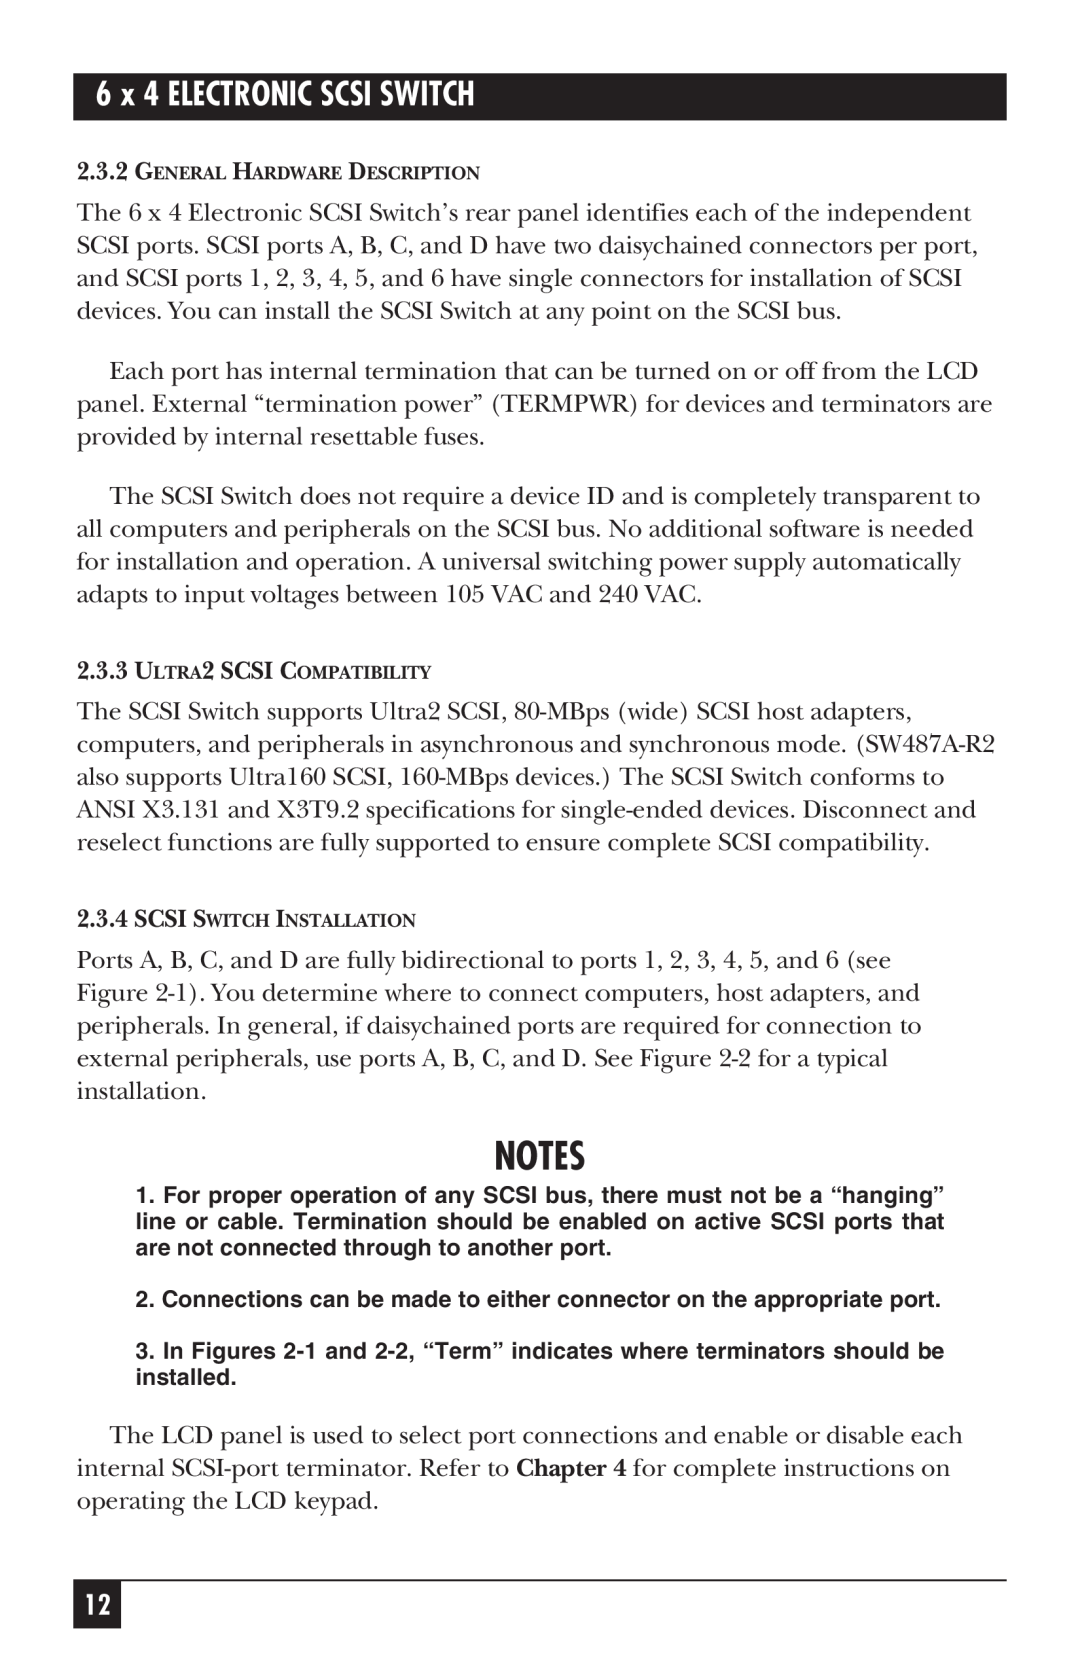 Black Box SW487A-R2 manual 6 x 4 ELECTRONIC SCSI SWITCH, General Hardware Description, ULTRA2 SCSI COMPATIBILITY 